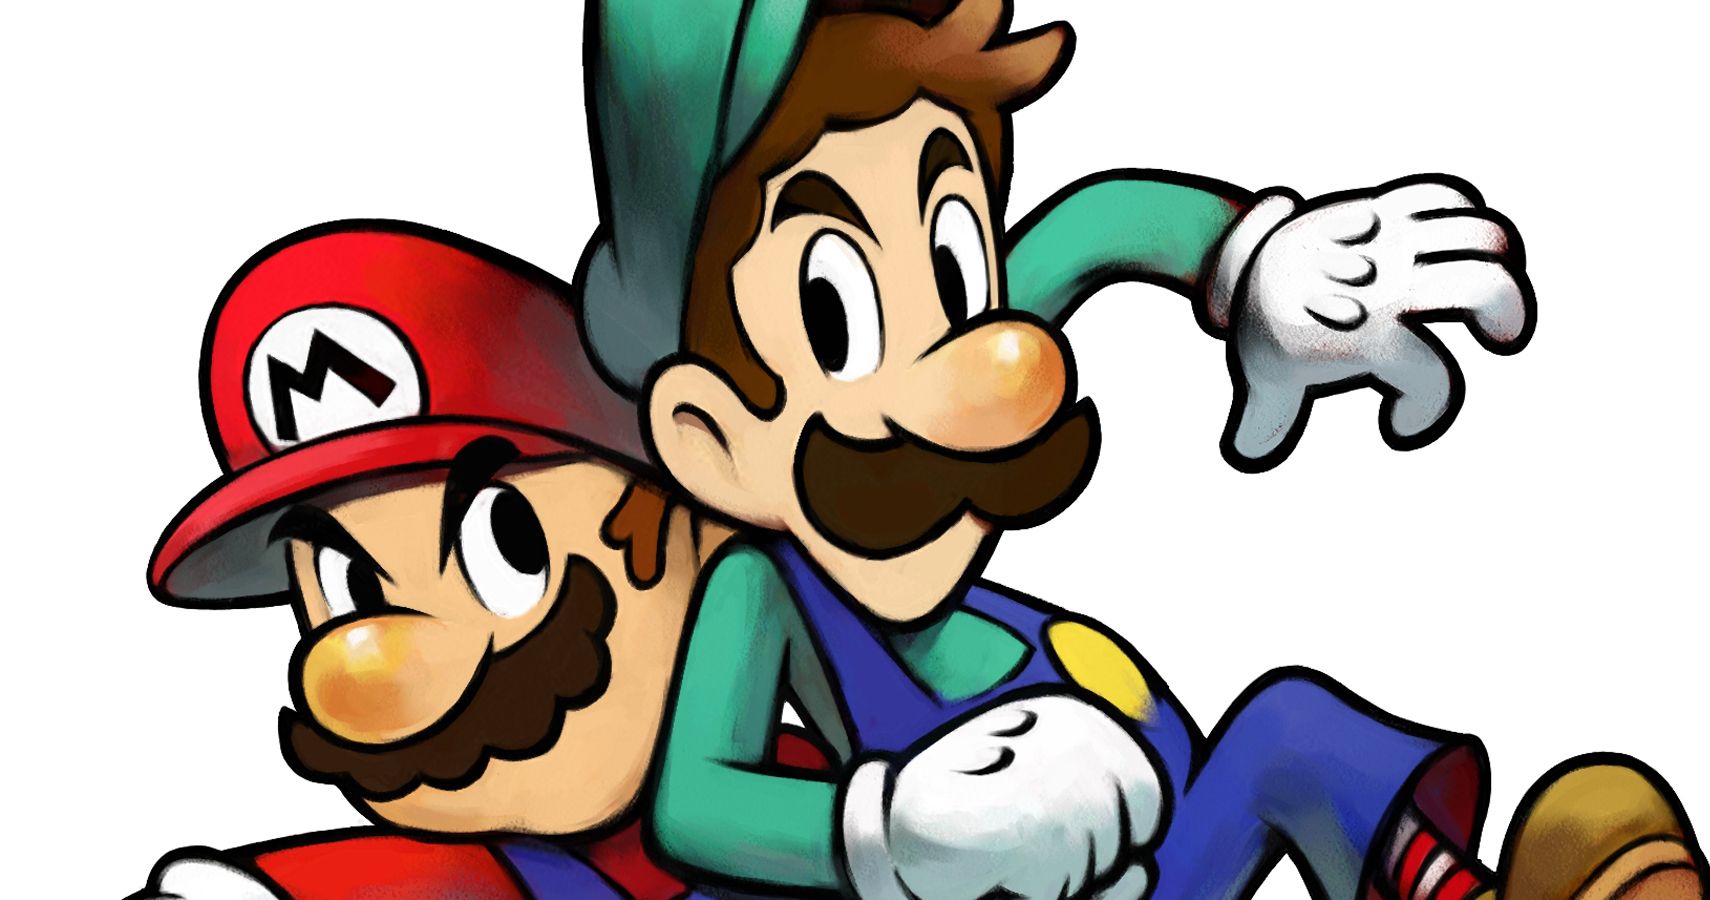 Detail Images Of Luigi And Mario Nomer 51